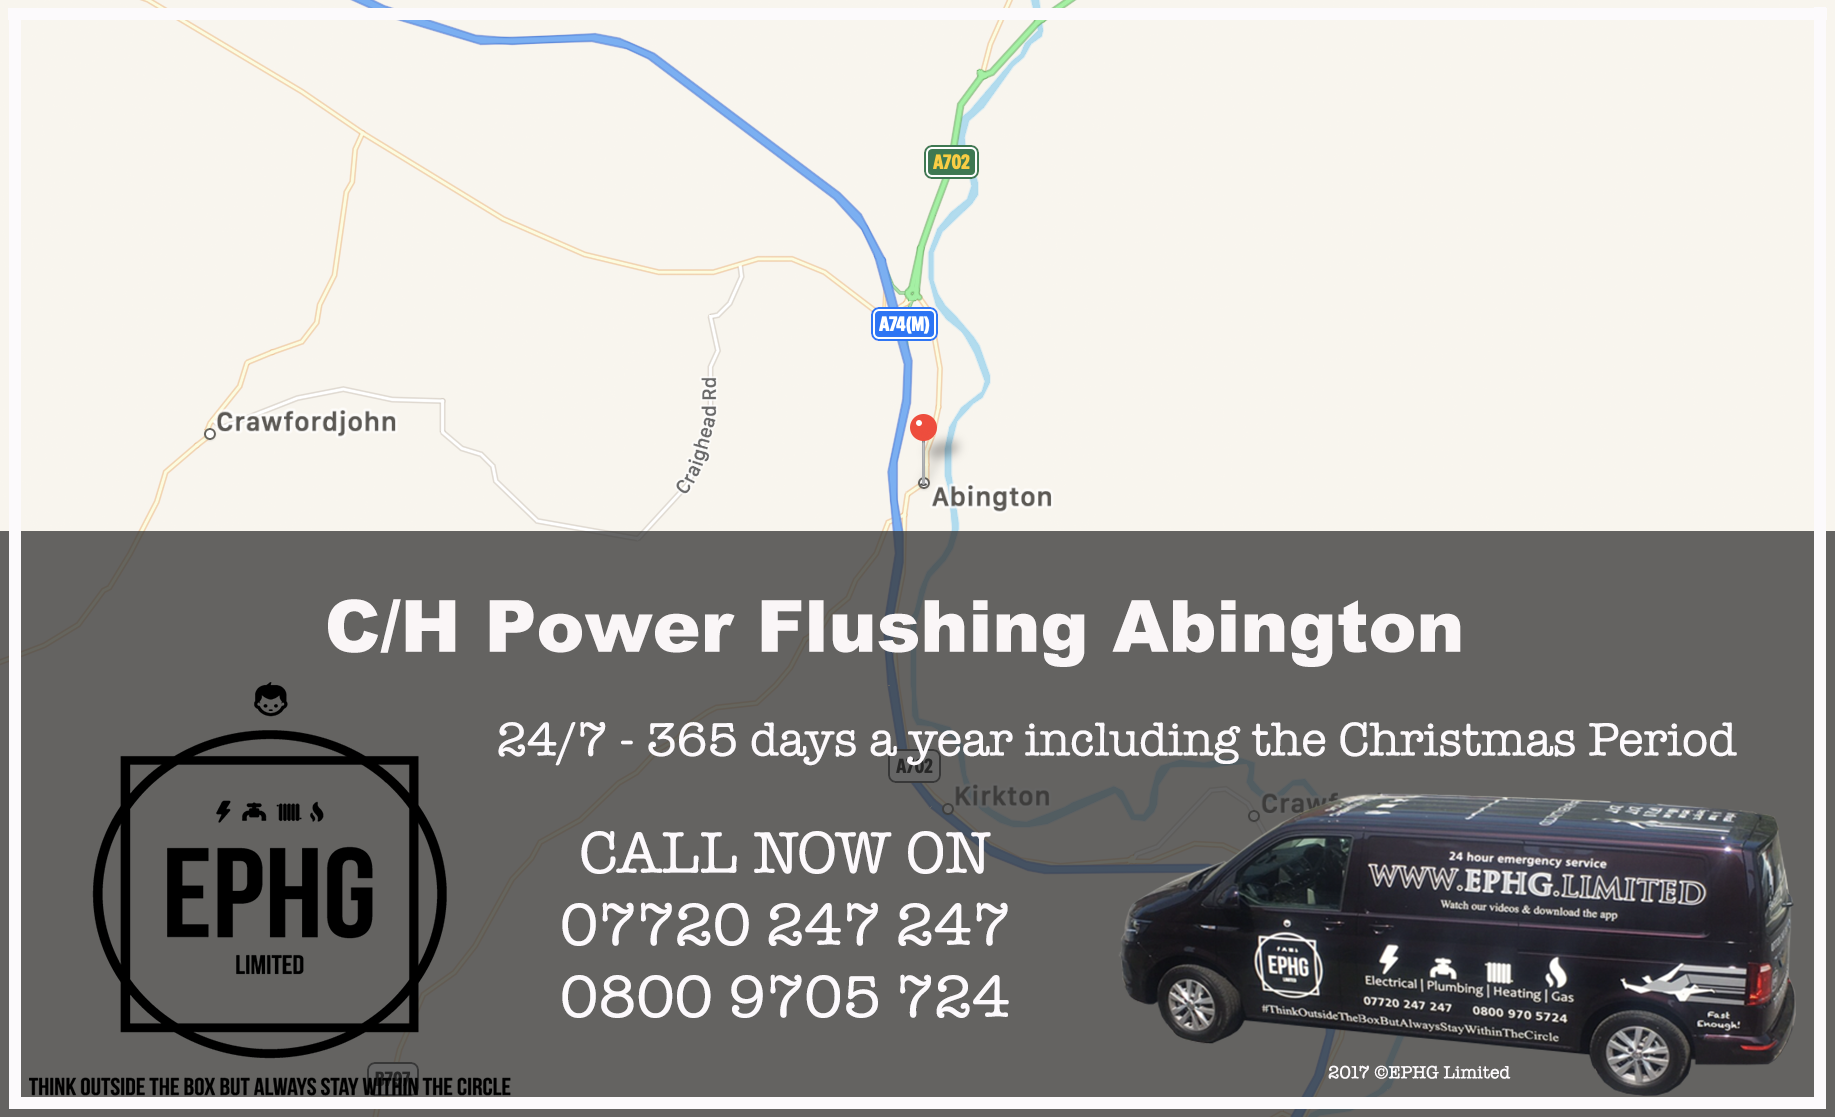 Central Heating Power Flush Abingdon